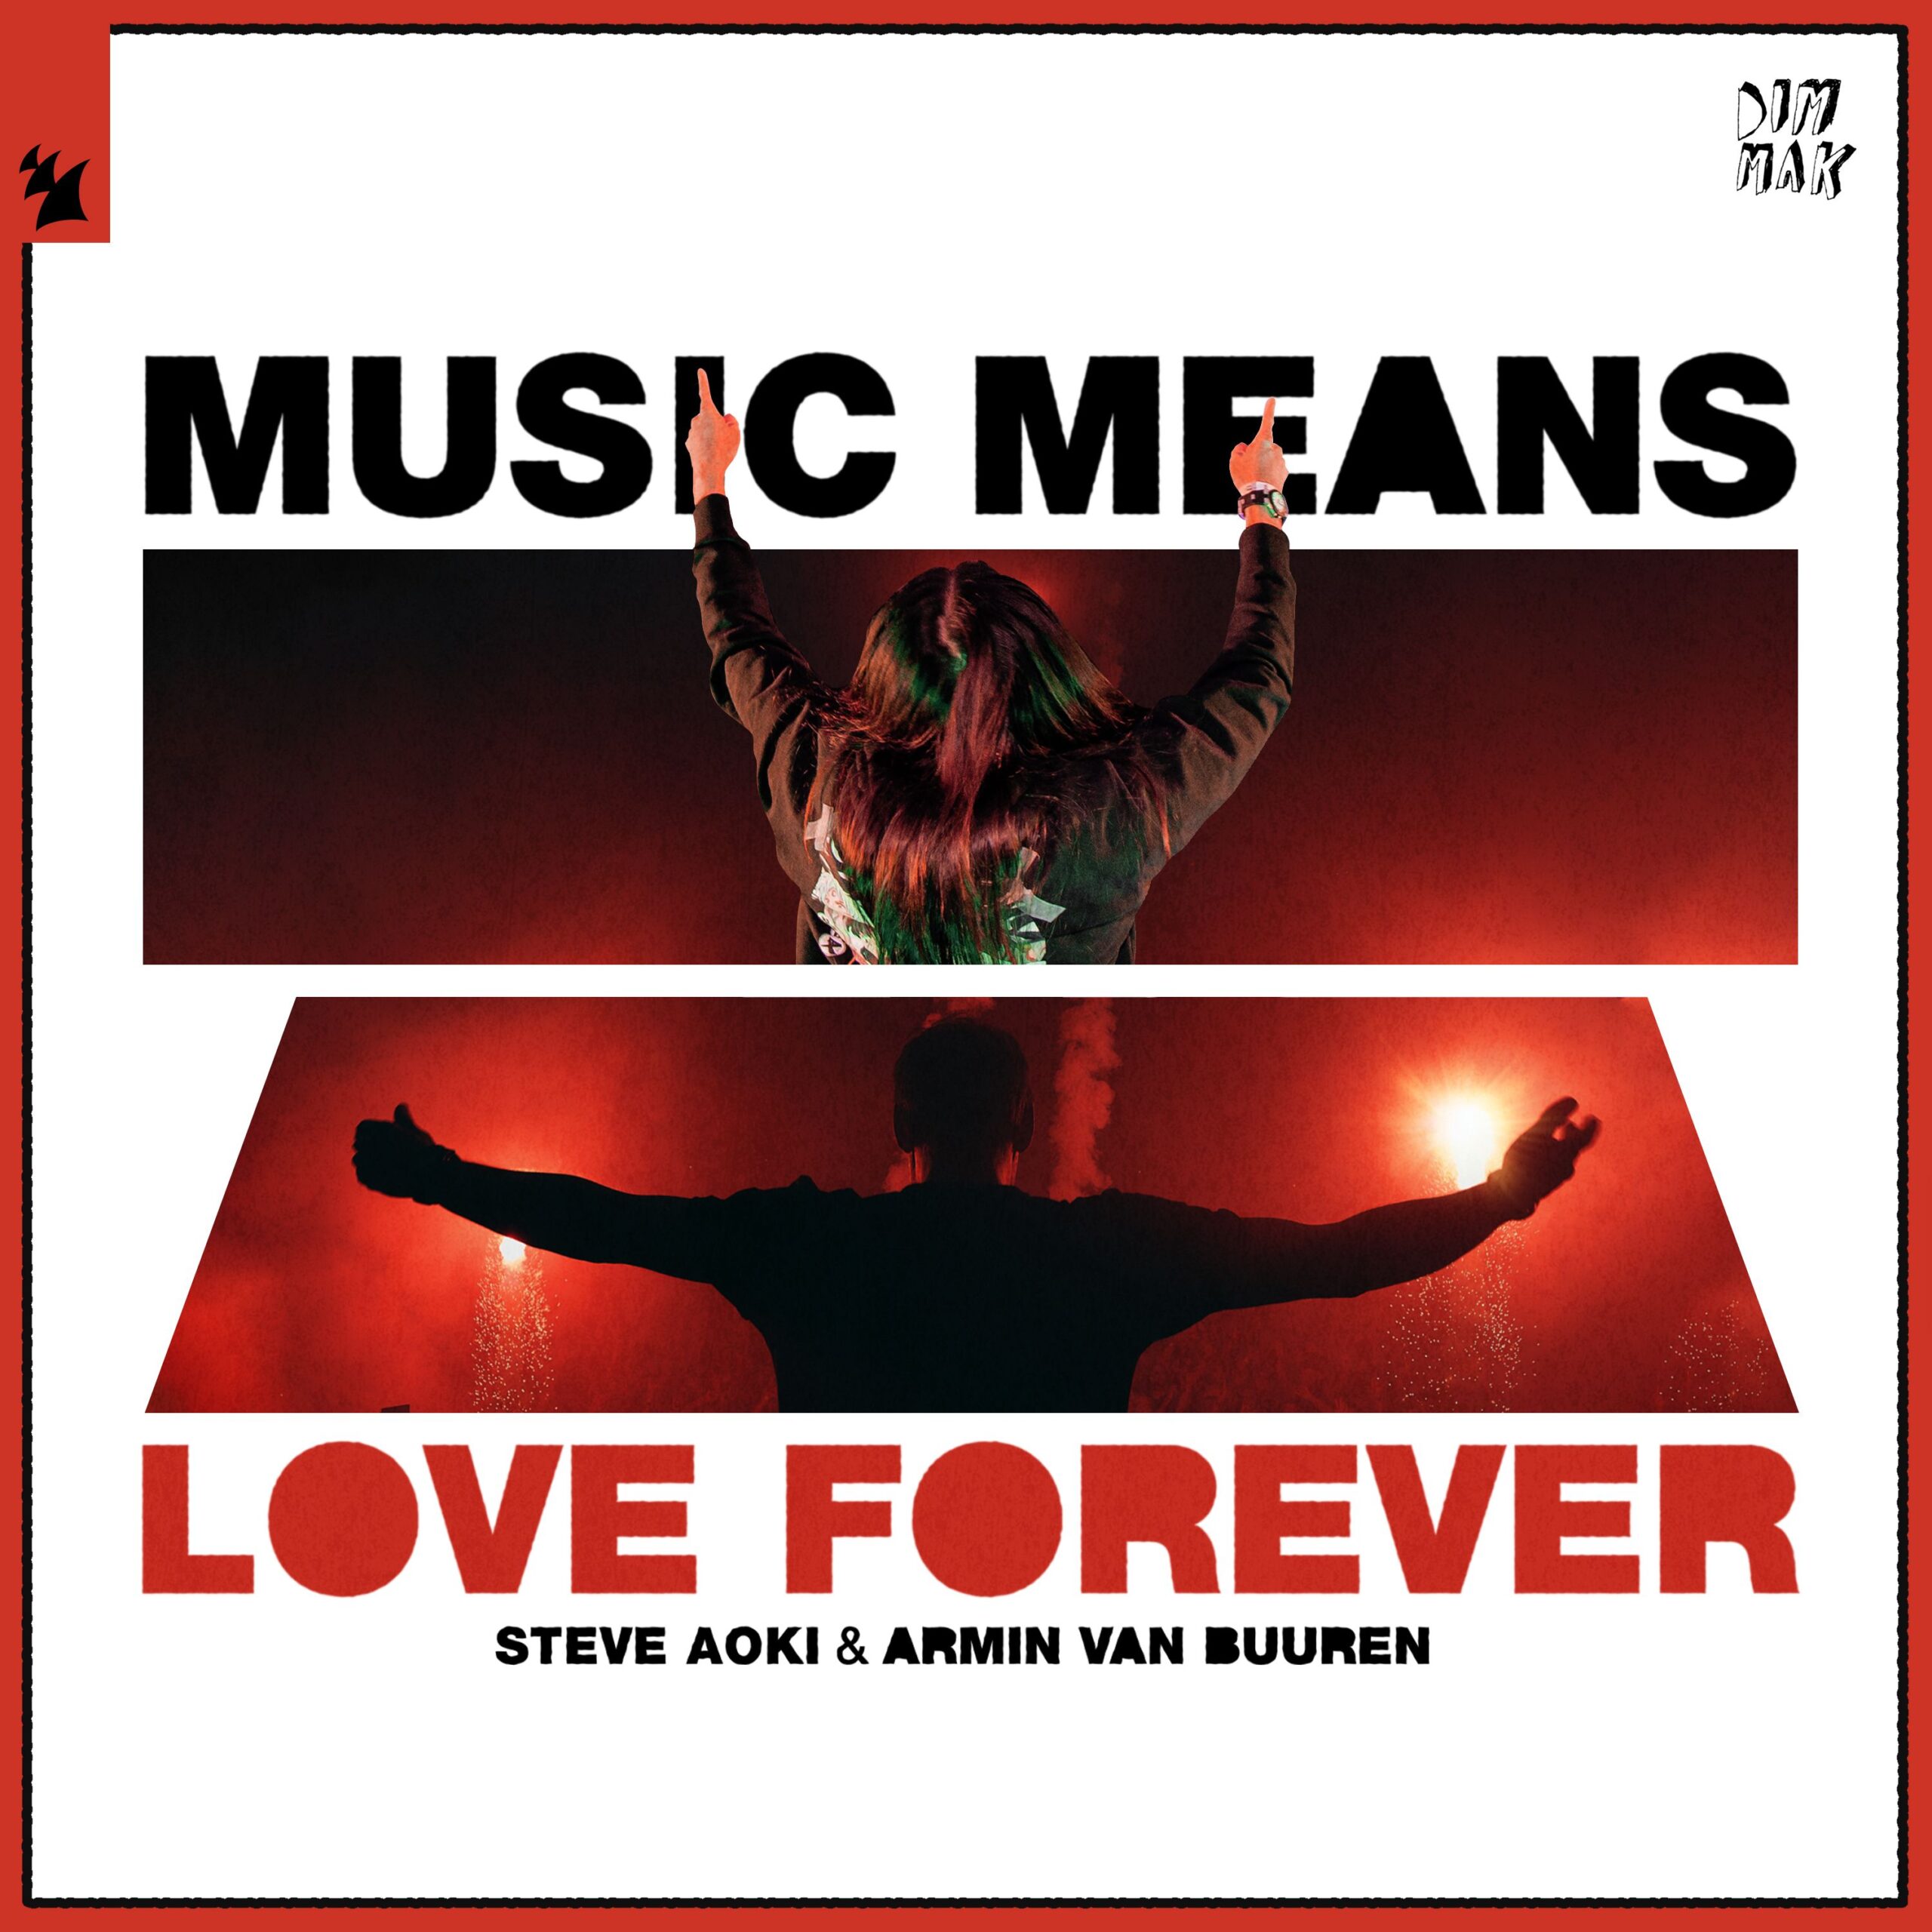 Steve Aoki and Armin van Buuren presents Music Means Love Forever on Armada Music